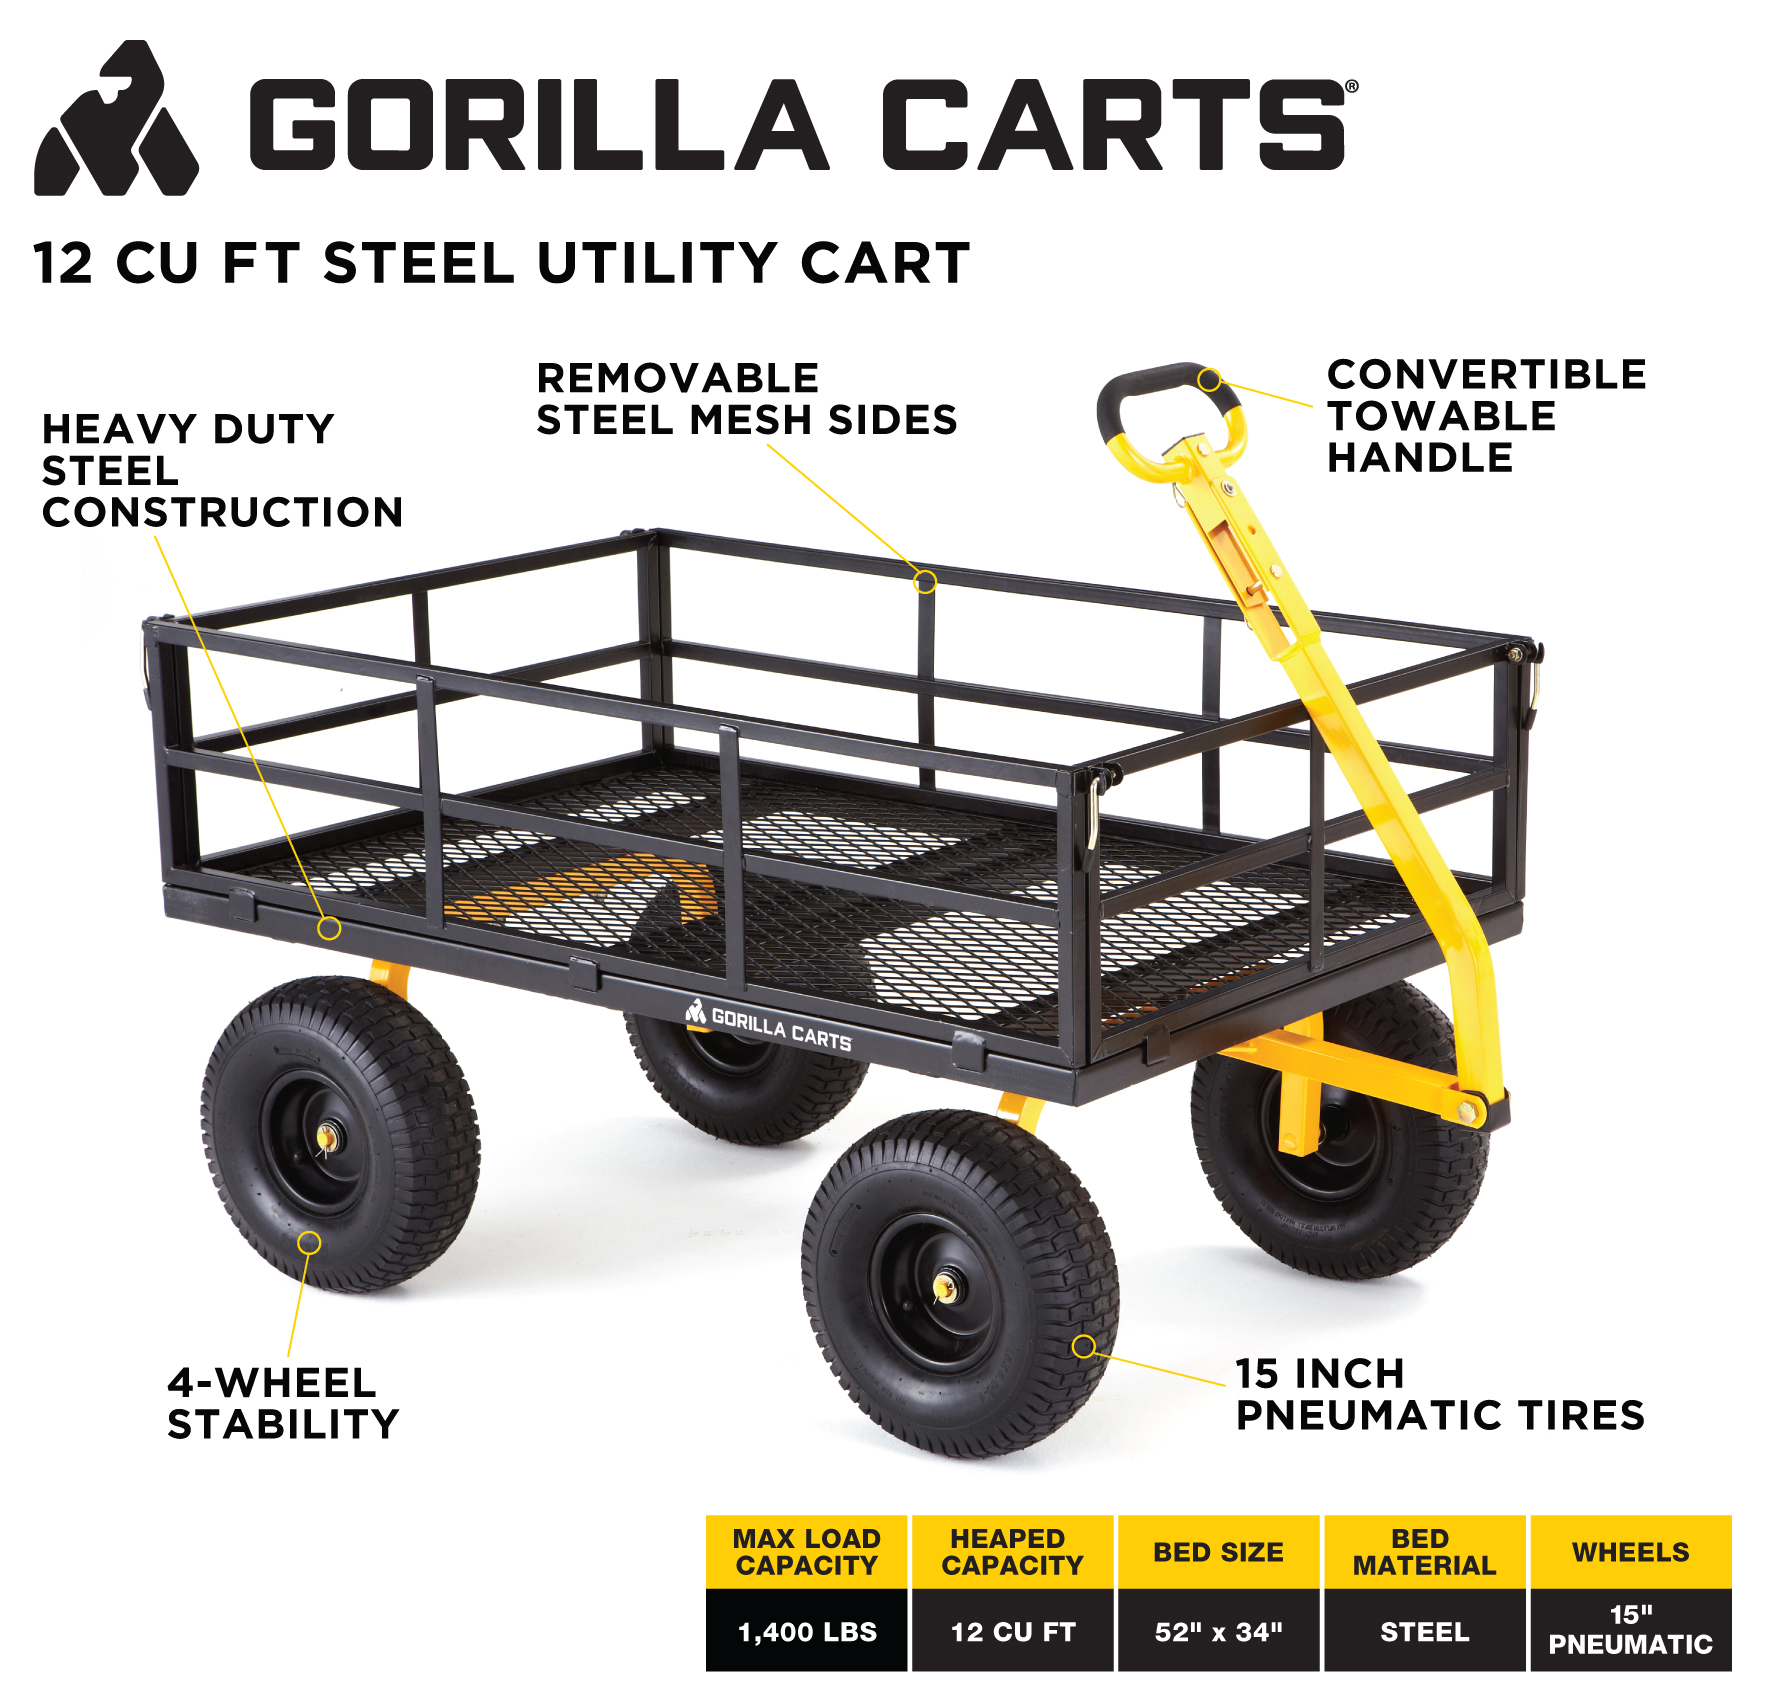 Gorilla Carts GOR1400-Com 1400-lb. Heavy-Duty Steel Utility Cart, 15" Tires, 52" x 34" Steel Bed - image 3 of 12